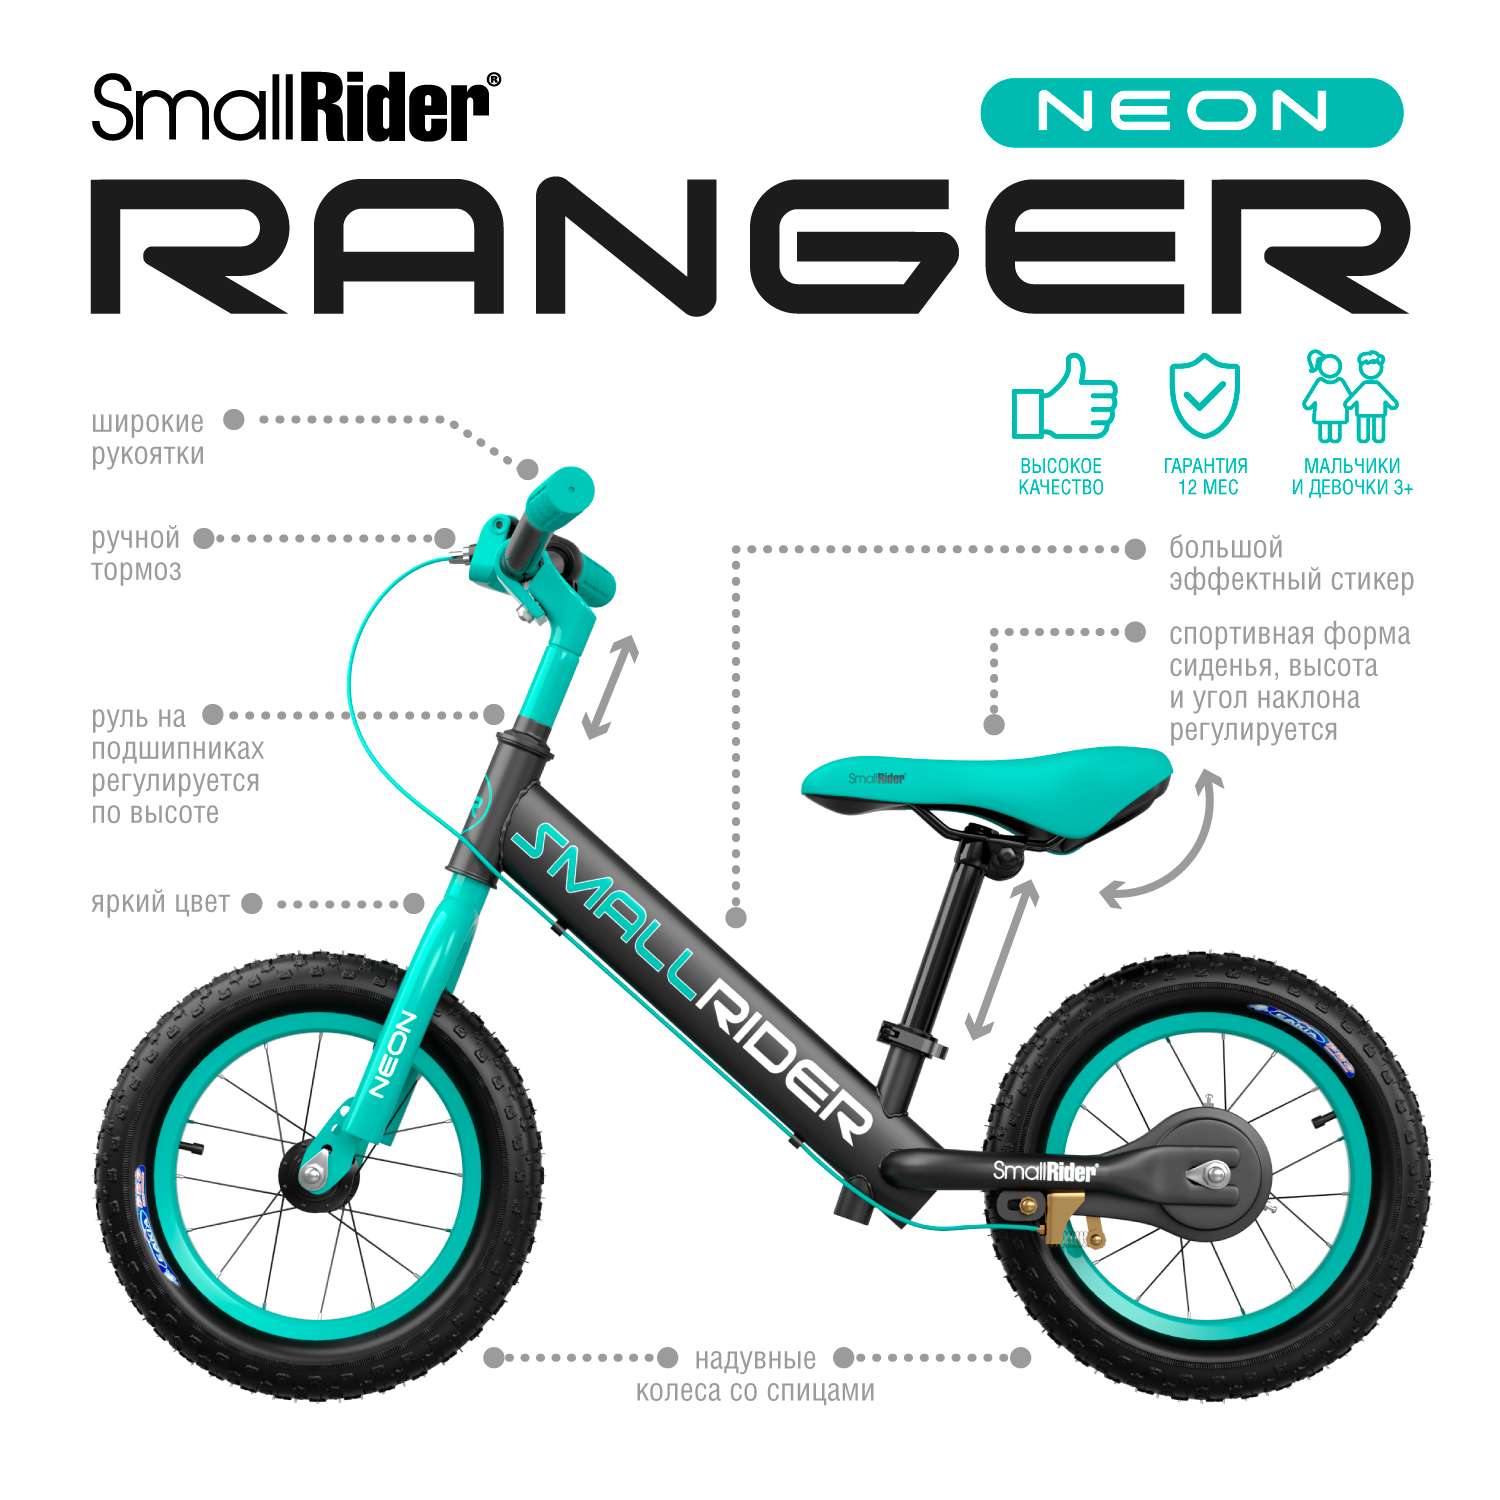 Беговел Small Rider Ranger 3 Neon R аква - фото 2